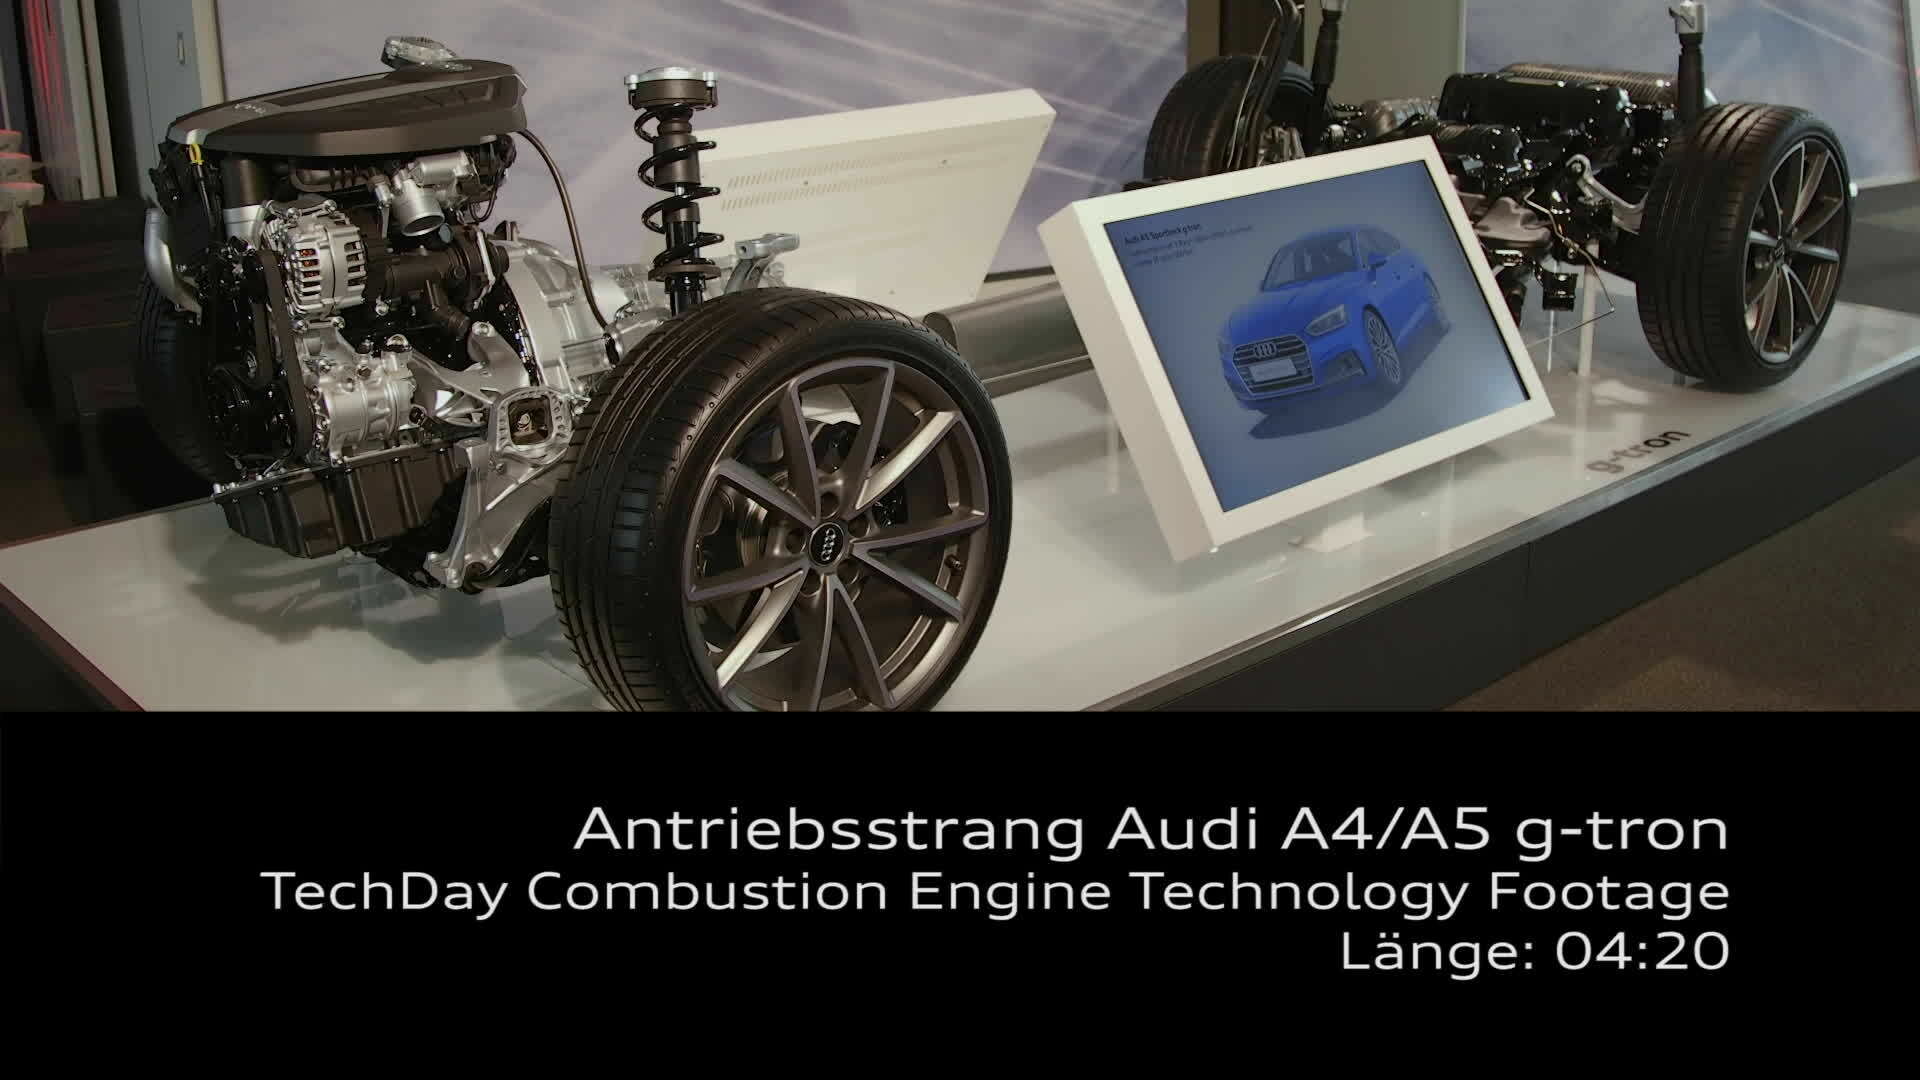 Footage Antriebsstrang Audi A4/A5 g-tron